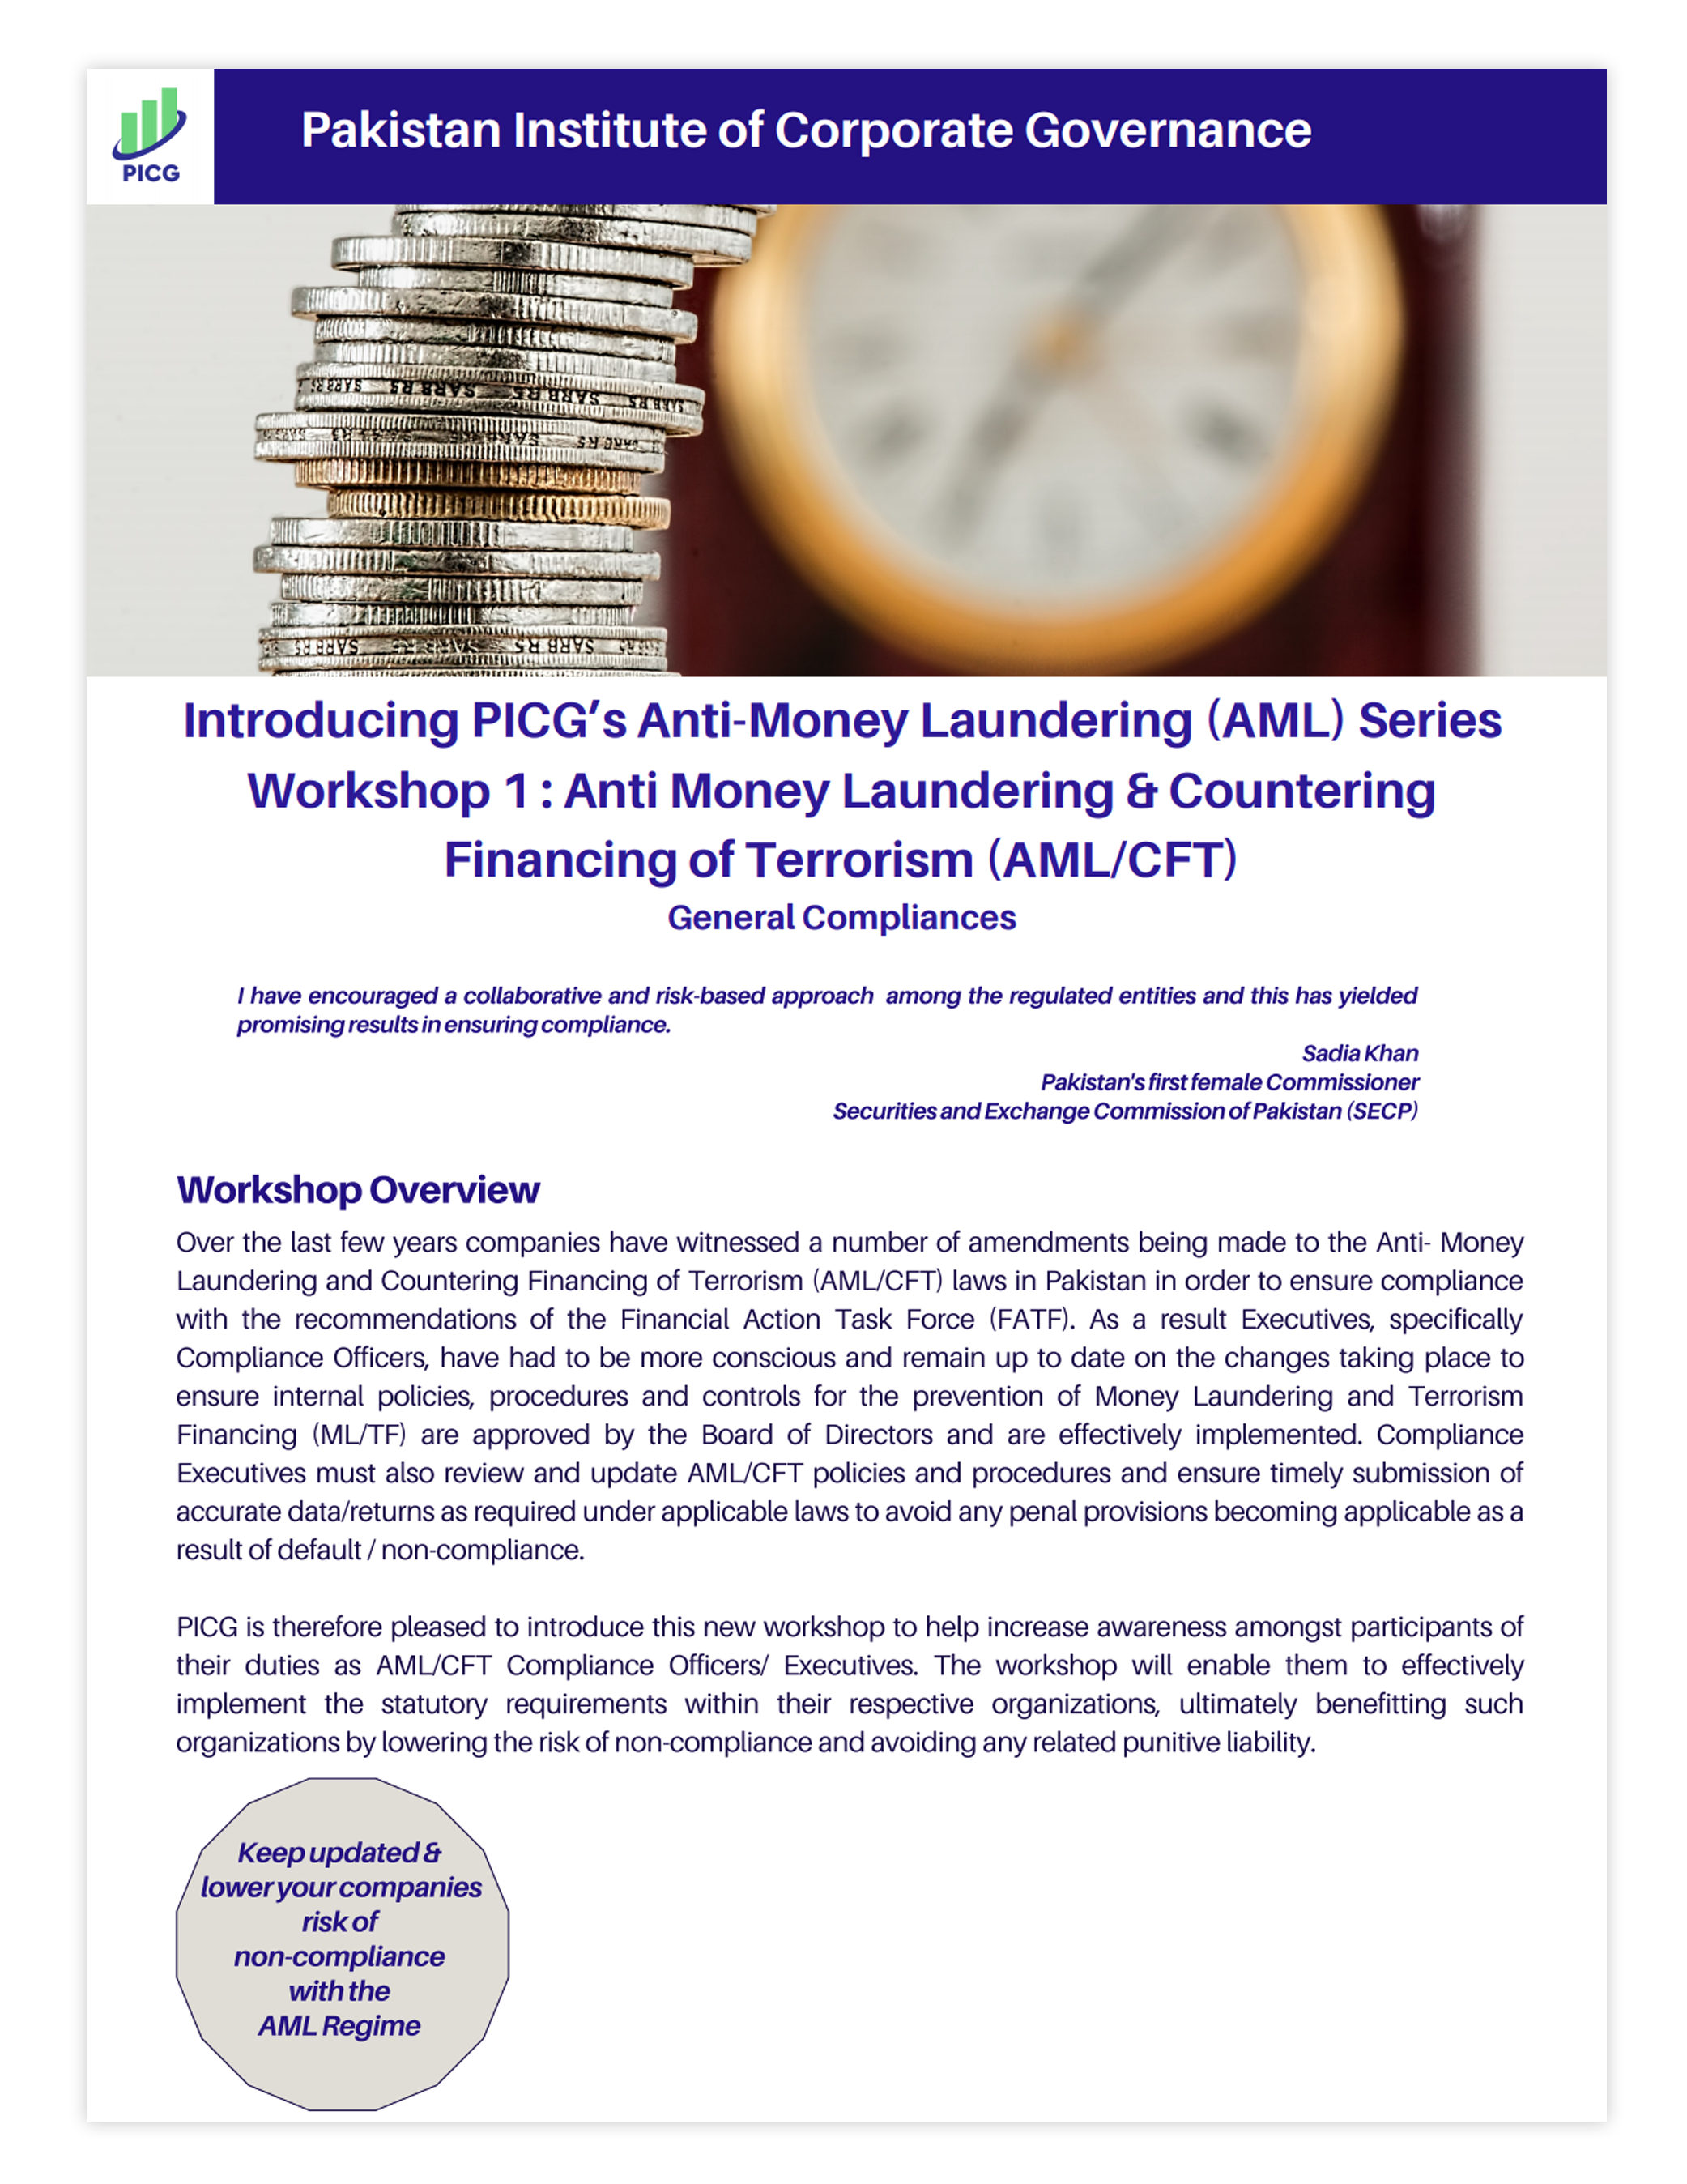 Anti-Money Laundering & Countering Financing of Terrorism